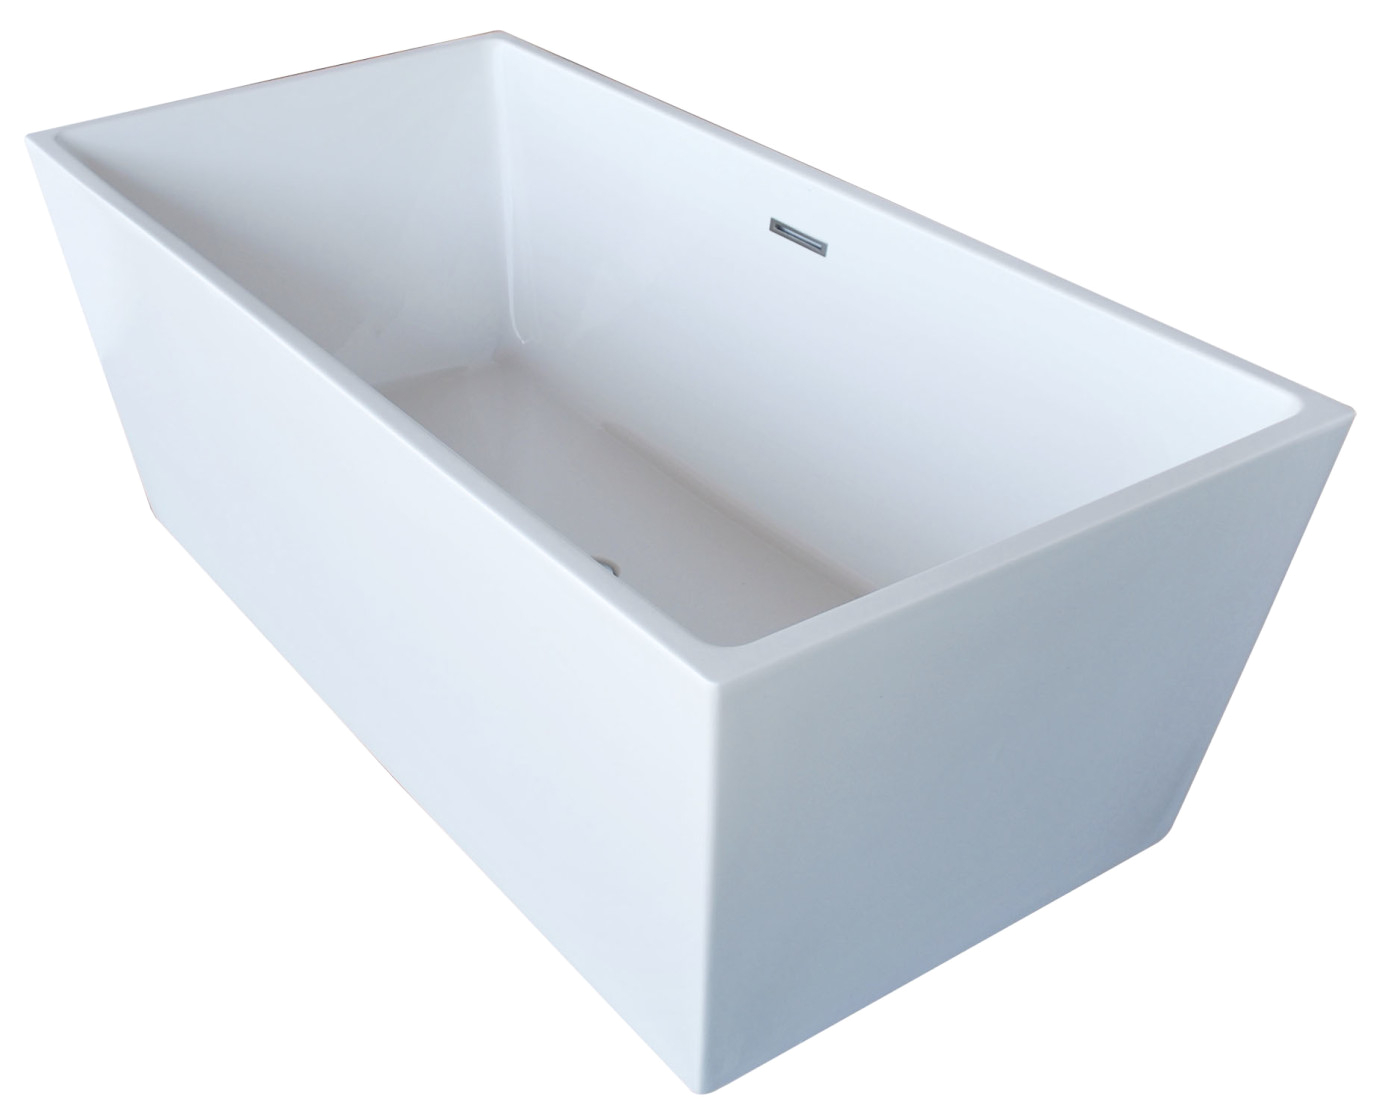 fjord 5 6 ft acrylic center drain freestanding bathtub in glossy white